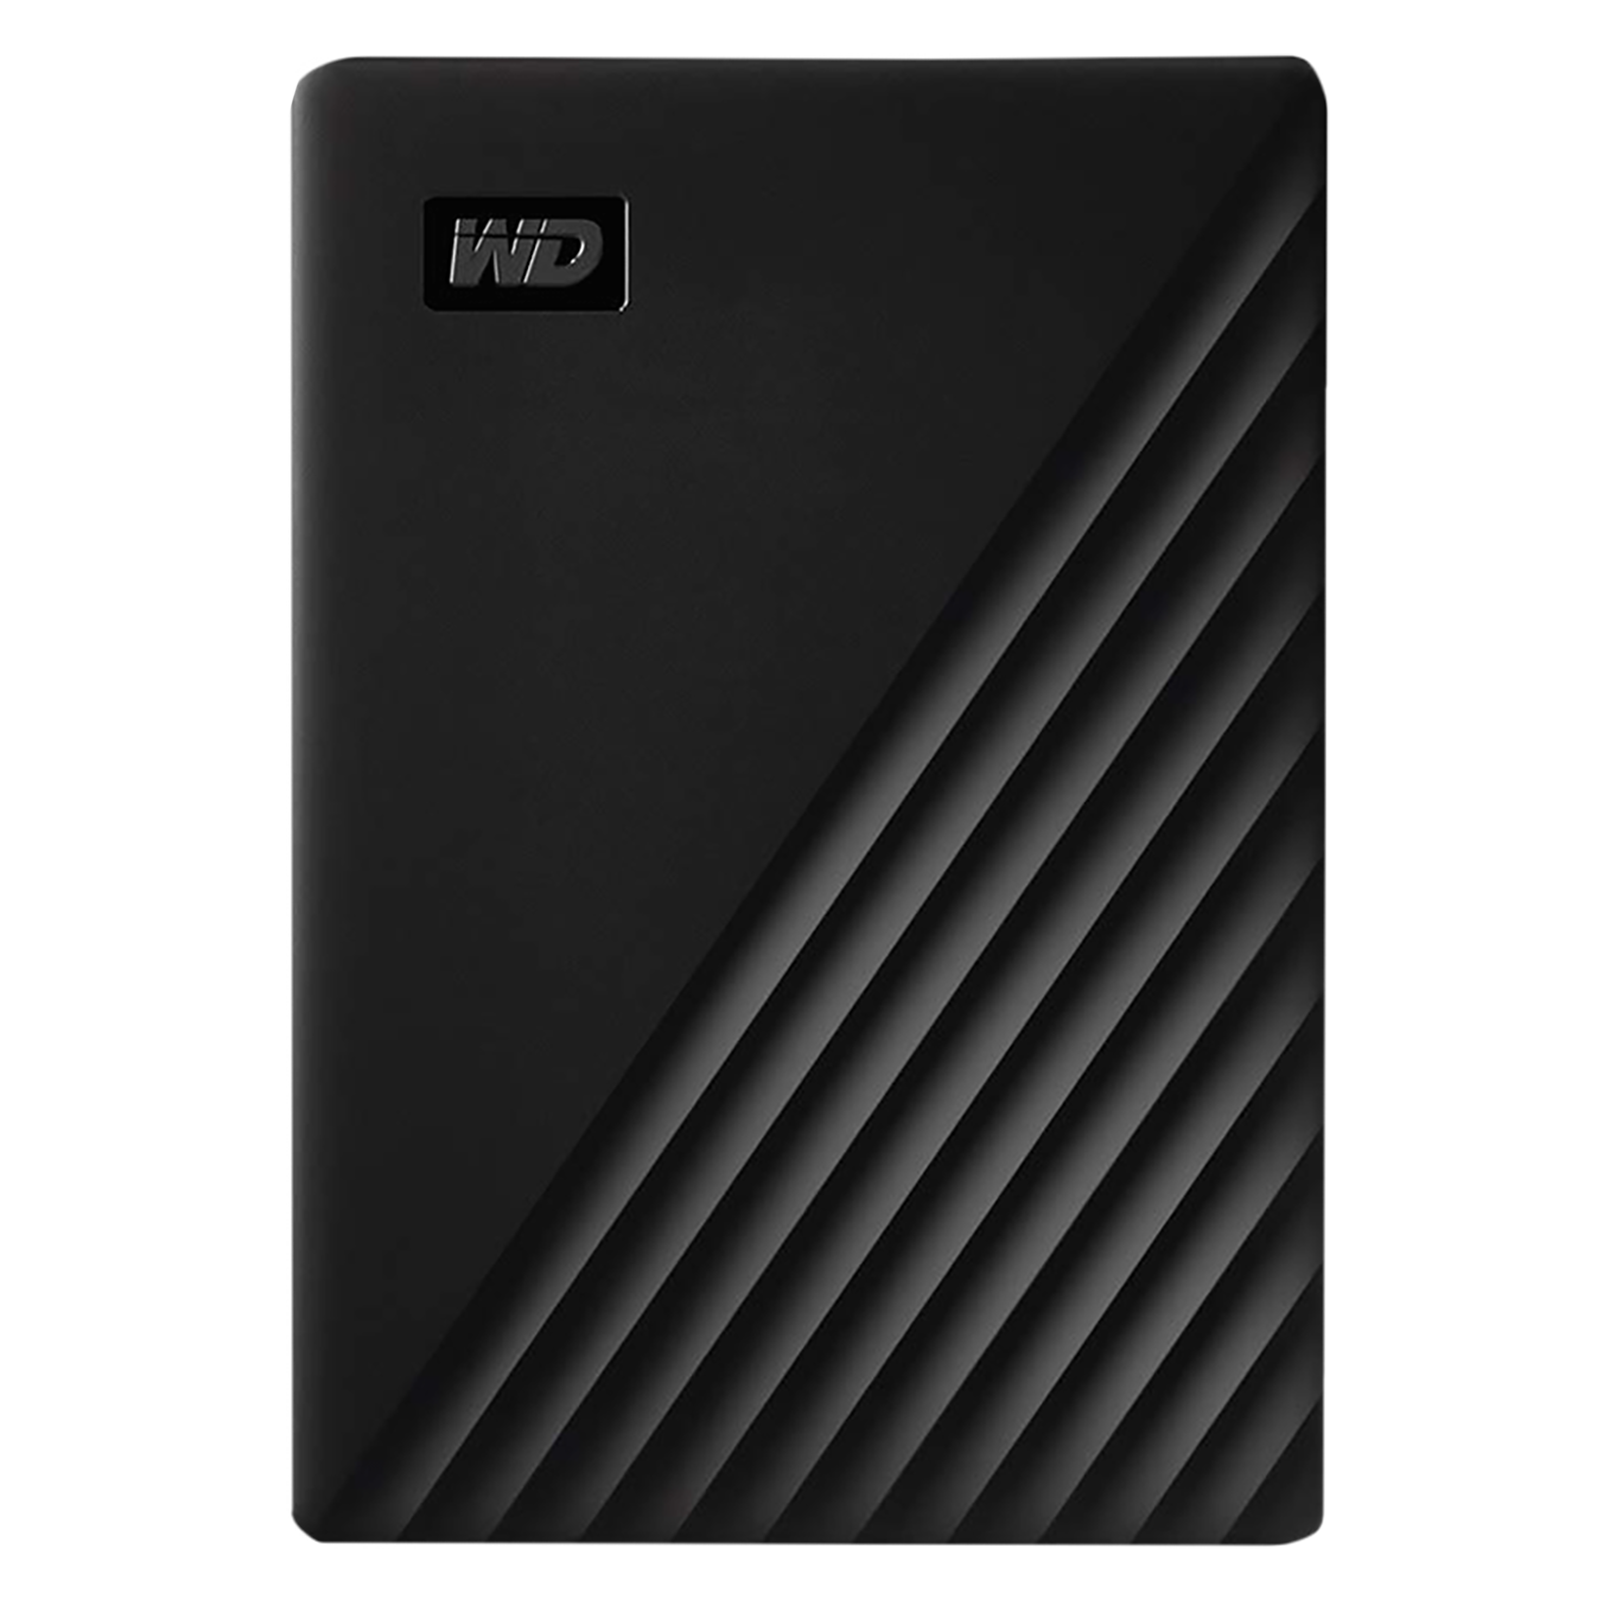 Western Digital My Passport 4TB USB 3.2 Hard Disk Drive (WDBPKJ0040BBK-WESN, Black)